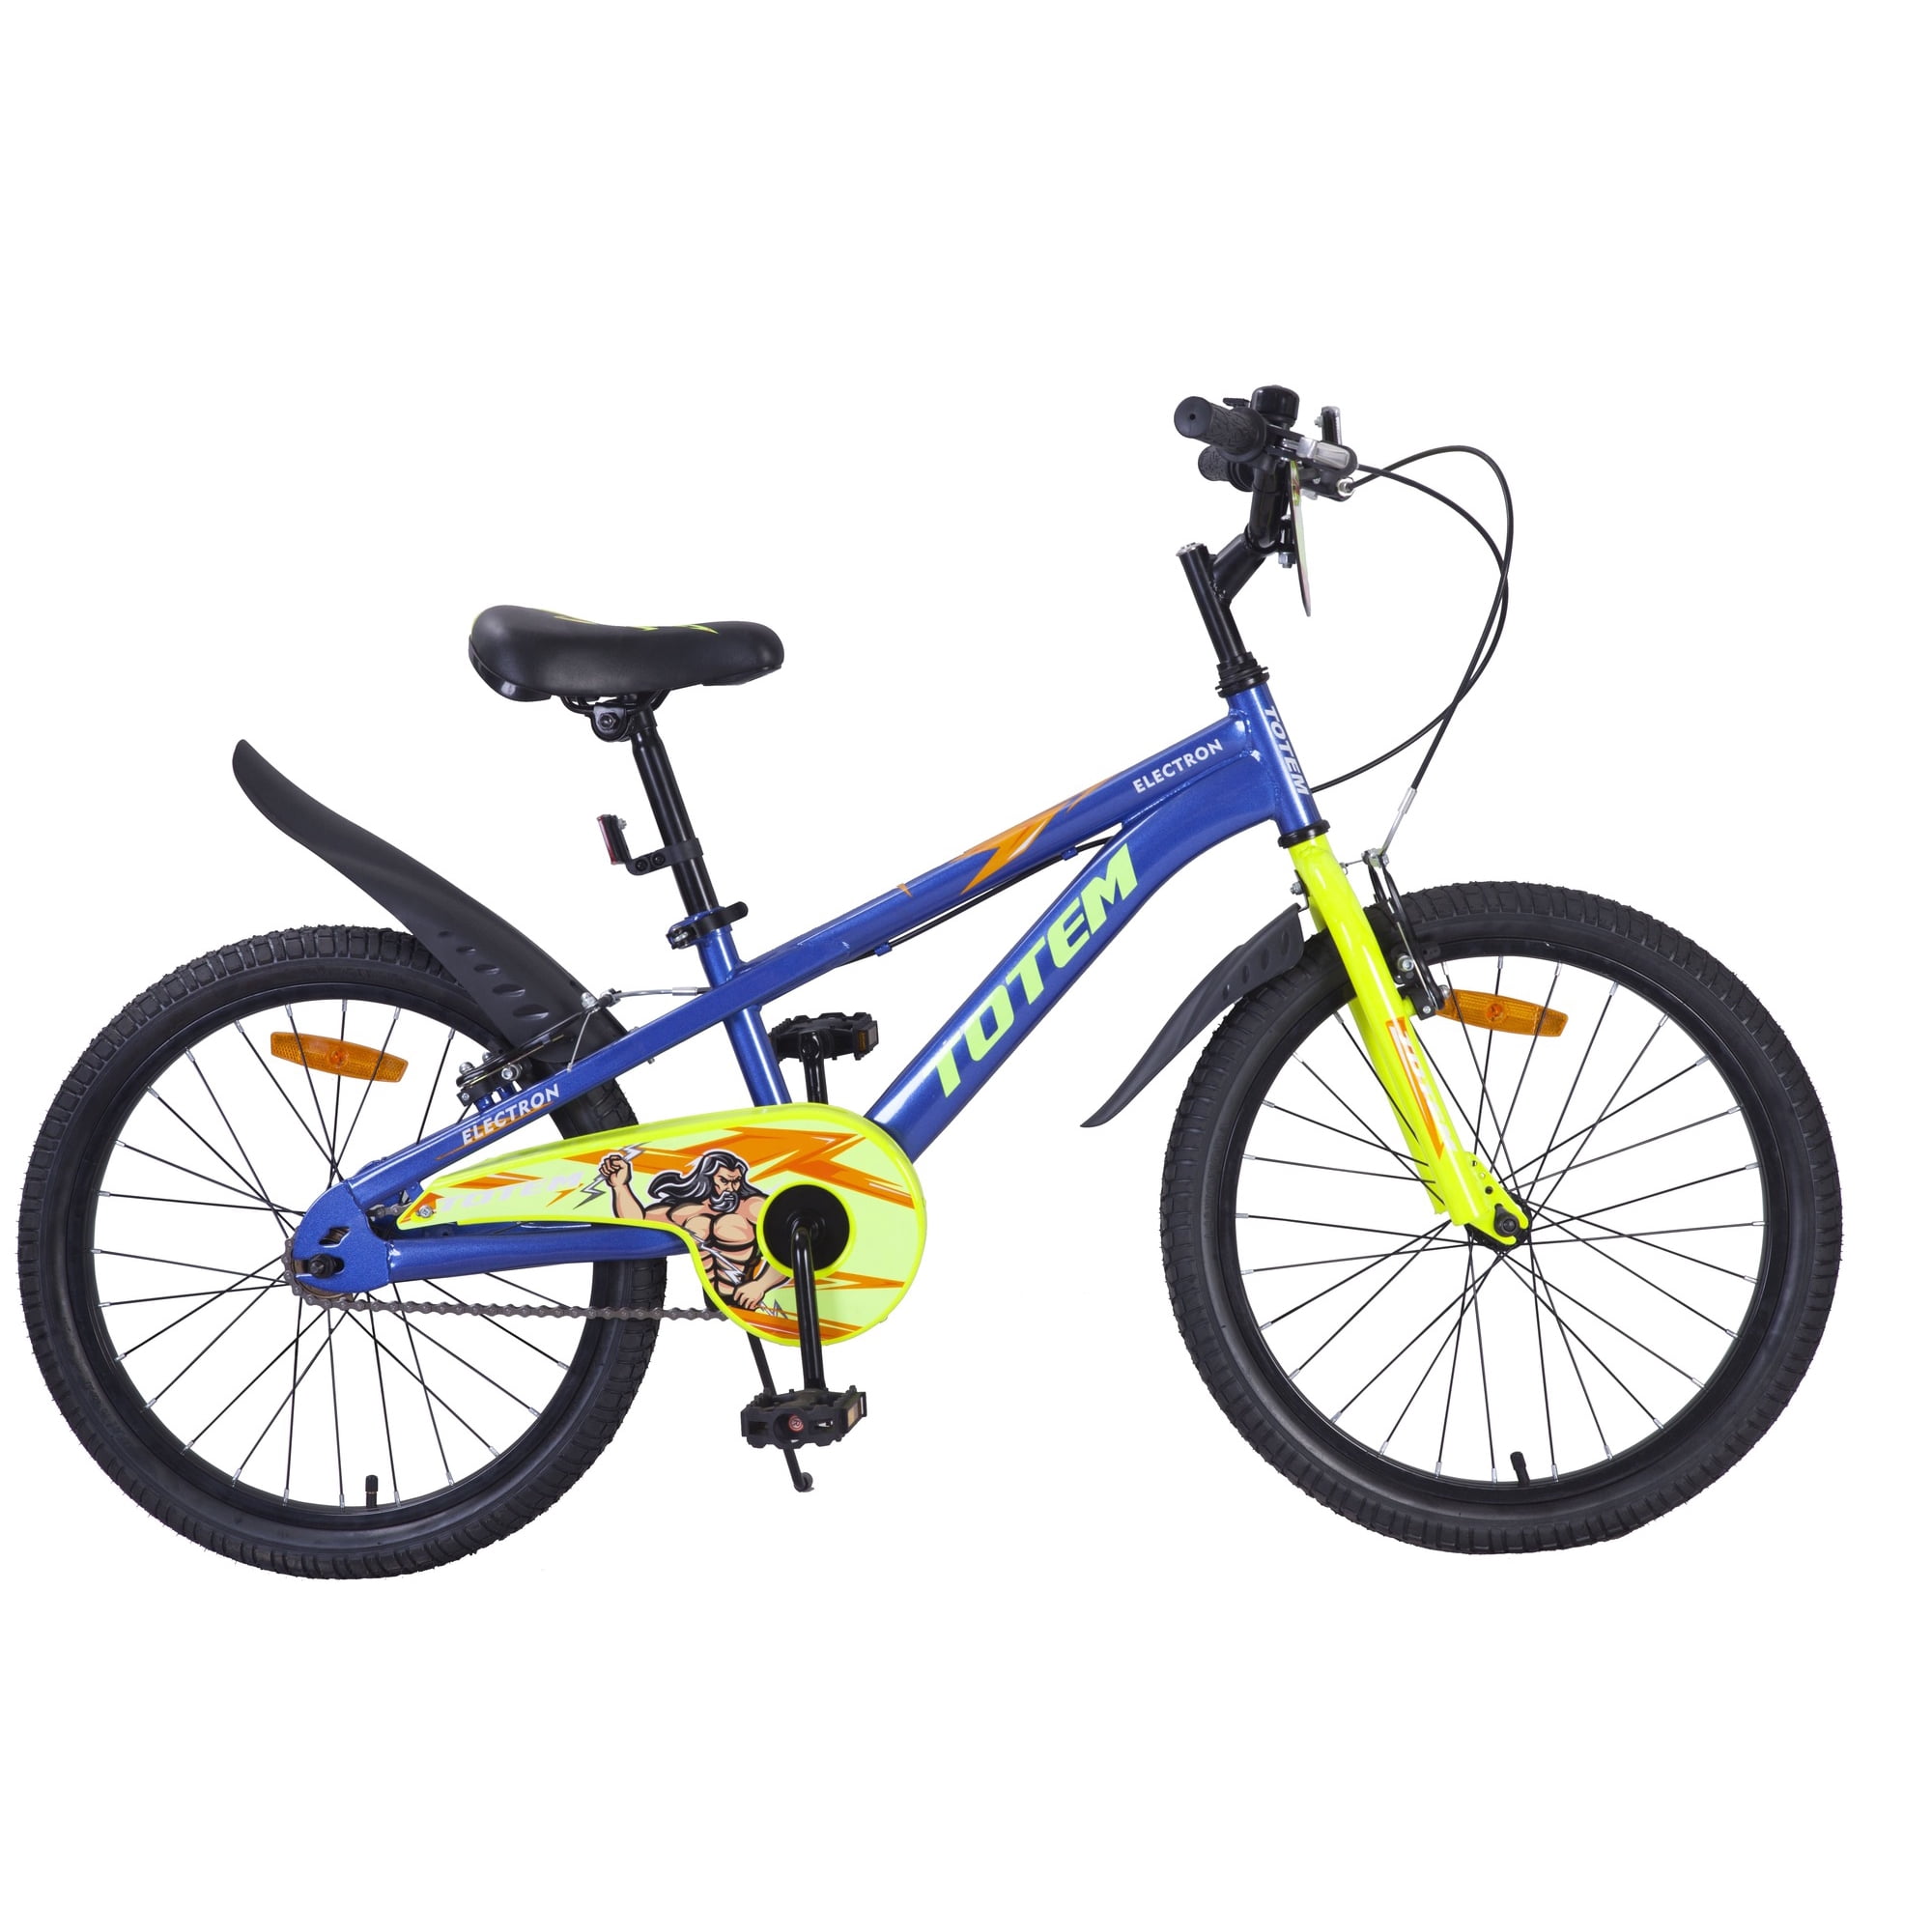 Bicicleta Totem Infantil Aro 20 Electron Color Azul